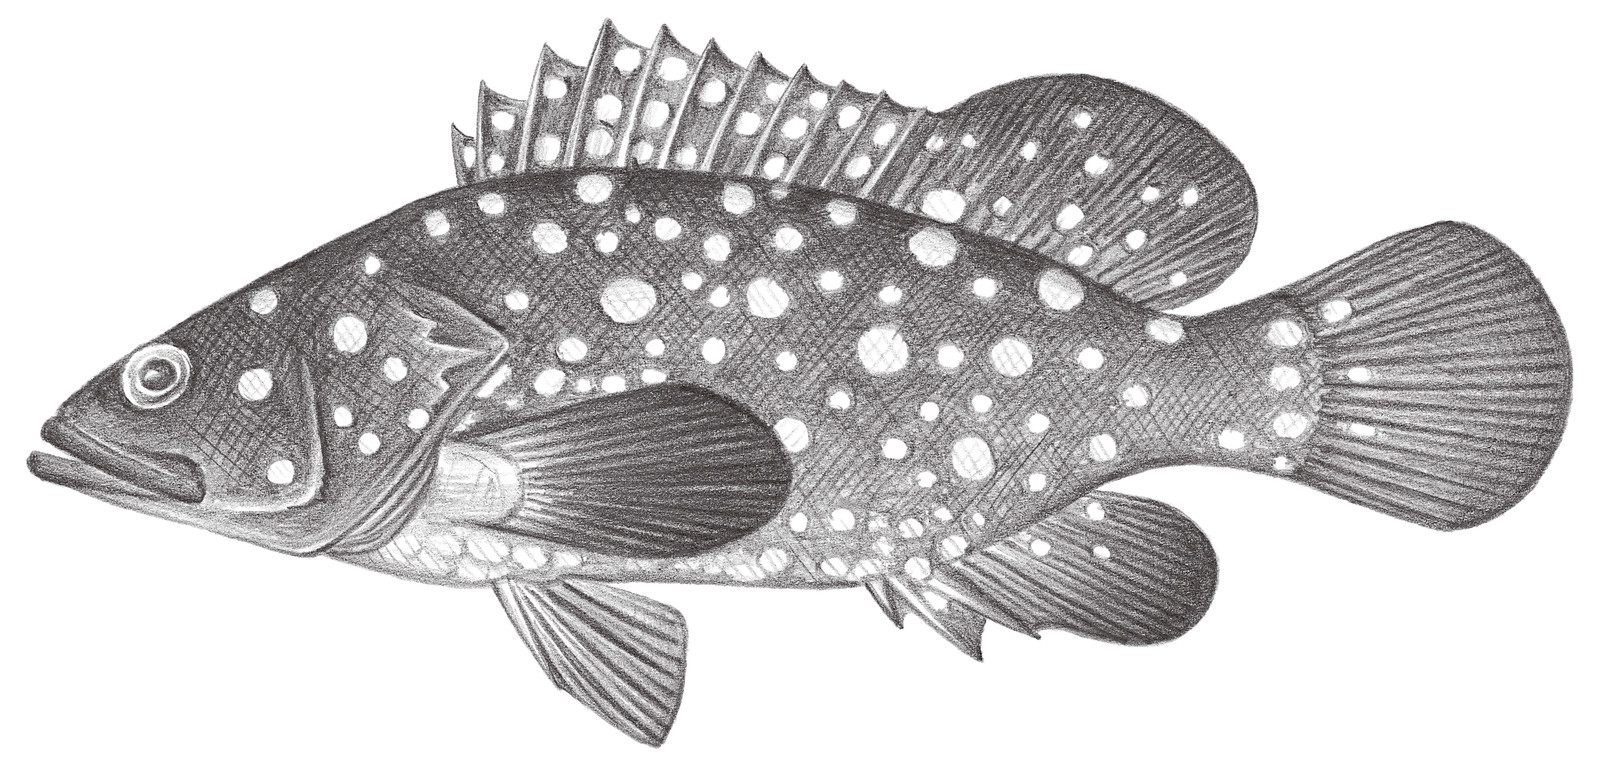 1020.	藍點石斑魚 Epinephelus caeruleopunctatus (Bloch, 1790)